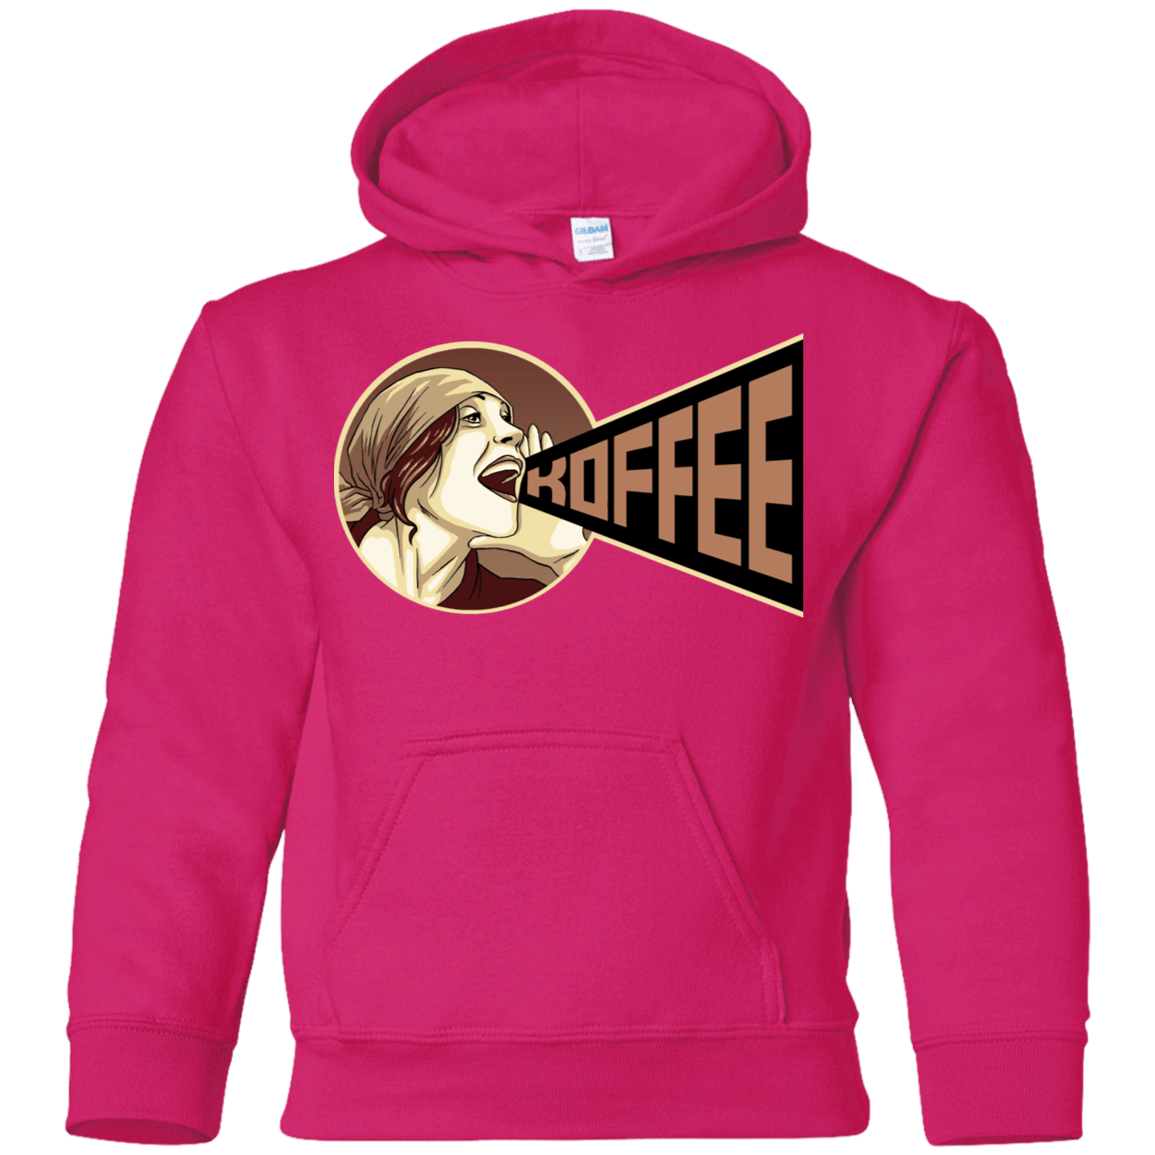 Sweatshirts Heliconia / YS Koffee Youth Hoodie